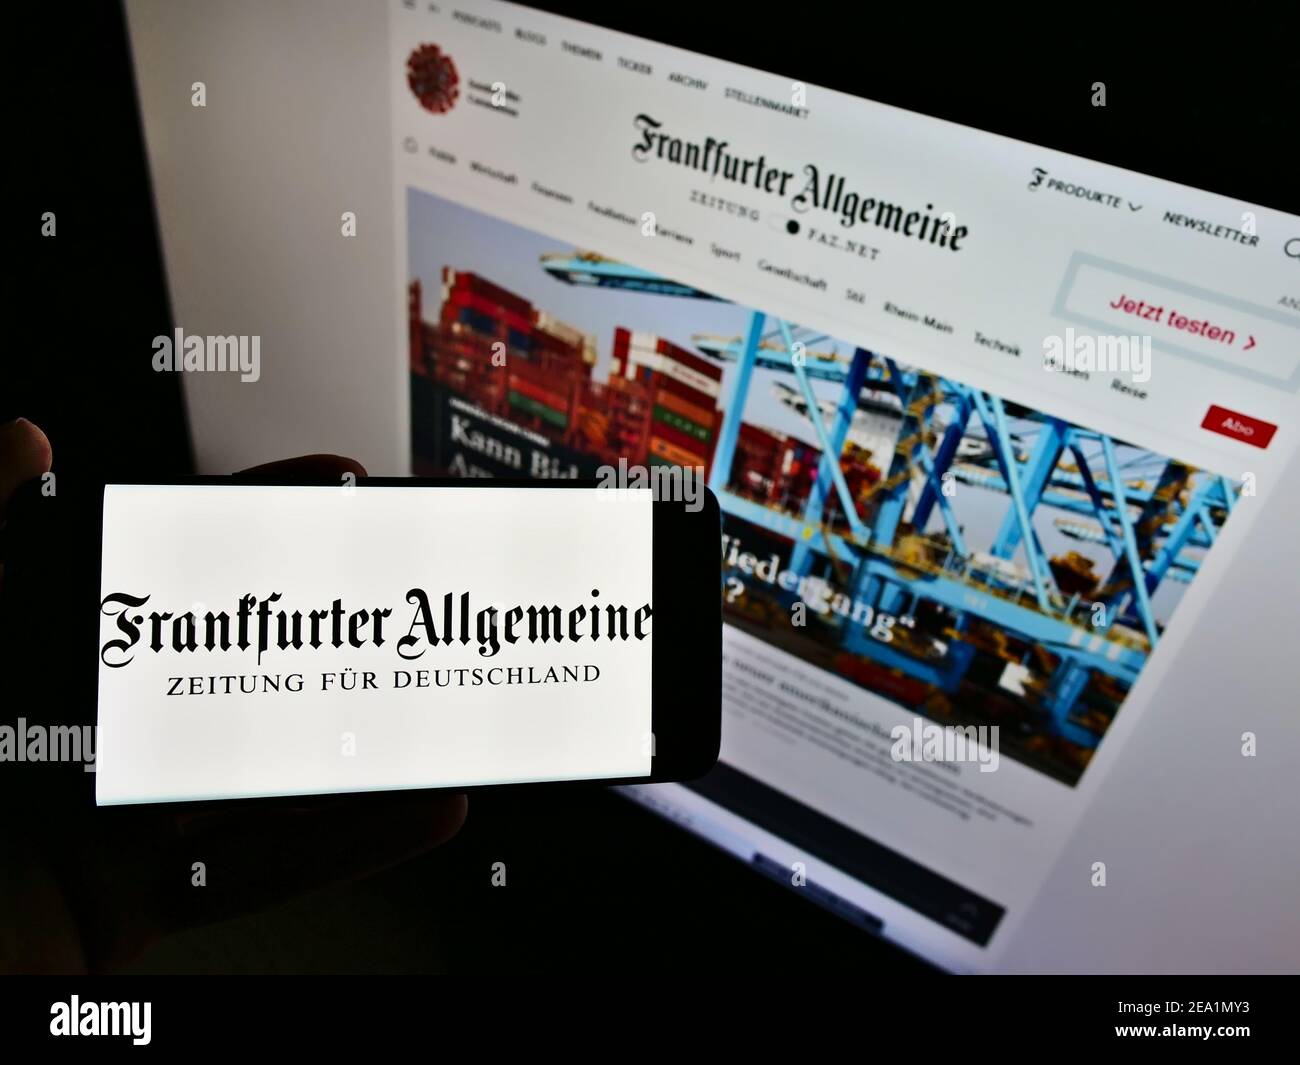 Person holding smartphone with logo of German newspaper Frankfurter Allgemeine Zeitung (FAZ) on screen in front of website. Focus on phone display. Stock Photo